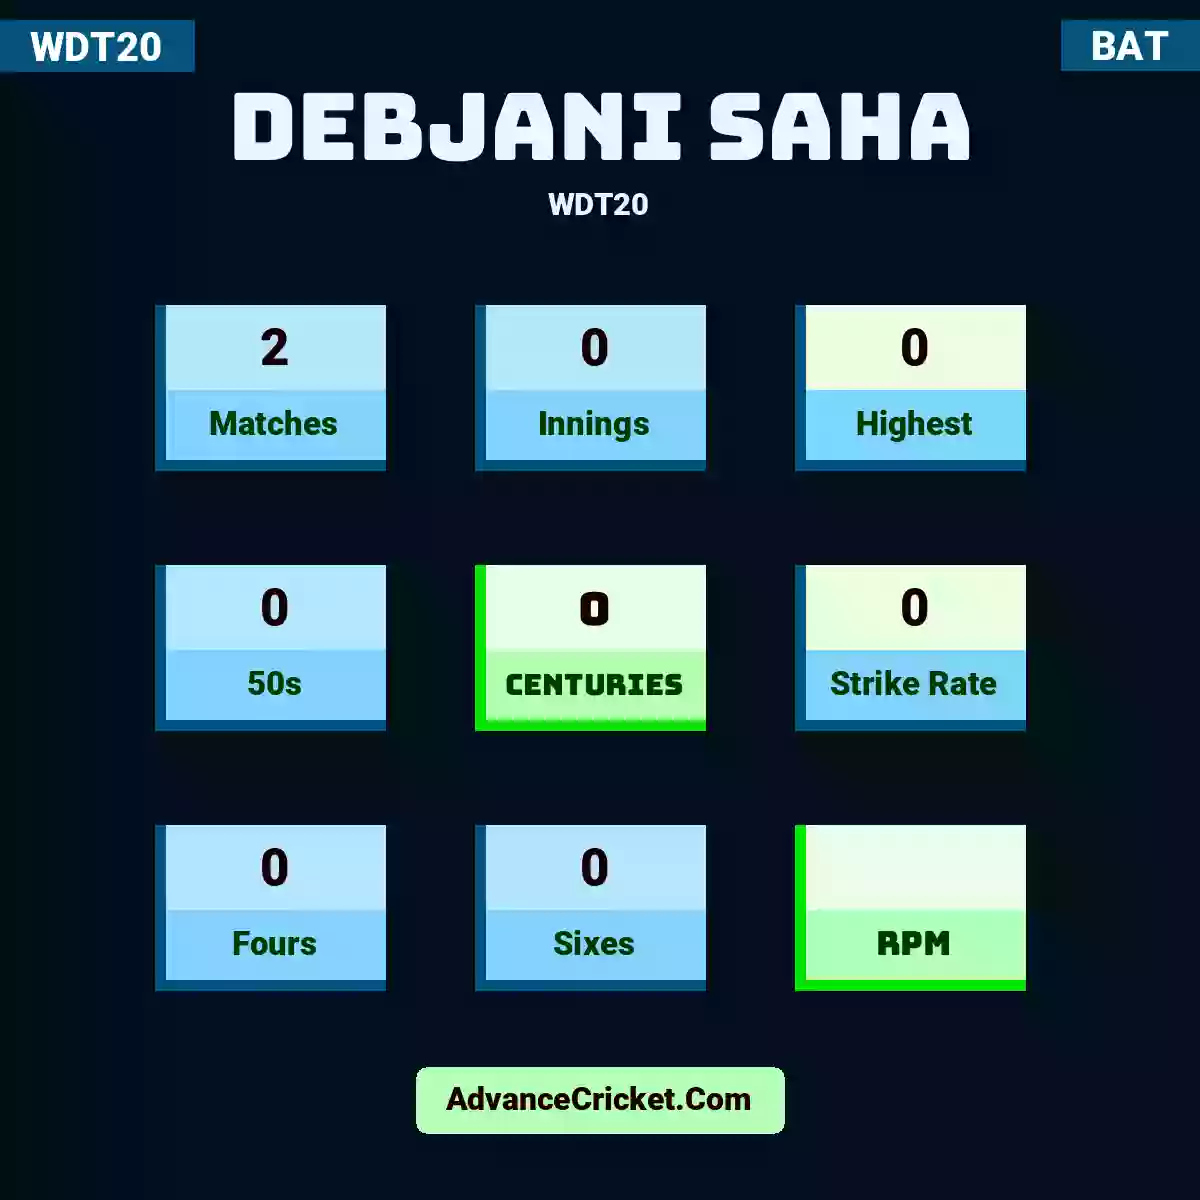 Debjani Saha WDT20 , Debjani Saha played 2 matches, scored 0 runs as highest, 0 half-centuries, and 0 centuries, with a strike rate of 0. D.Saha hit 0 fours and 0 sixes.